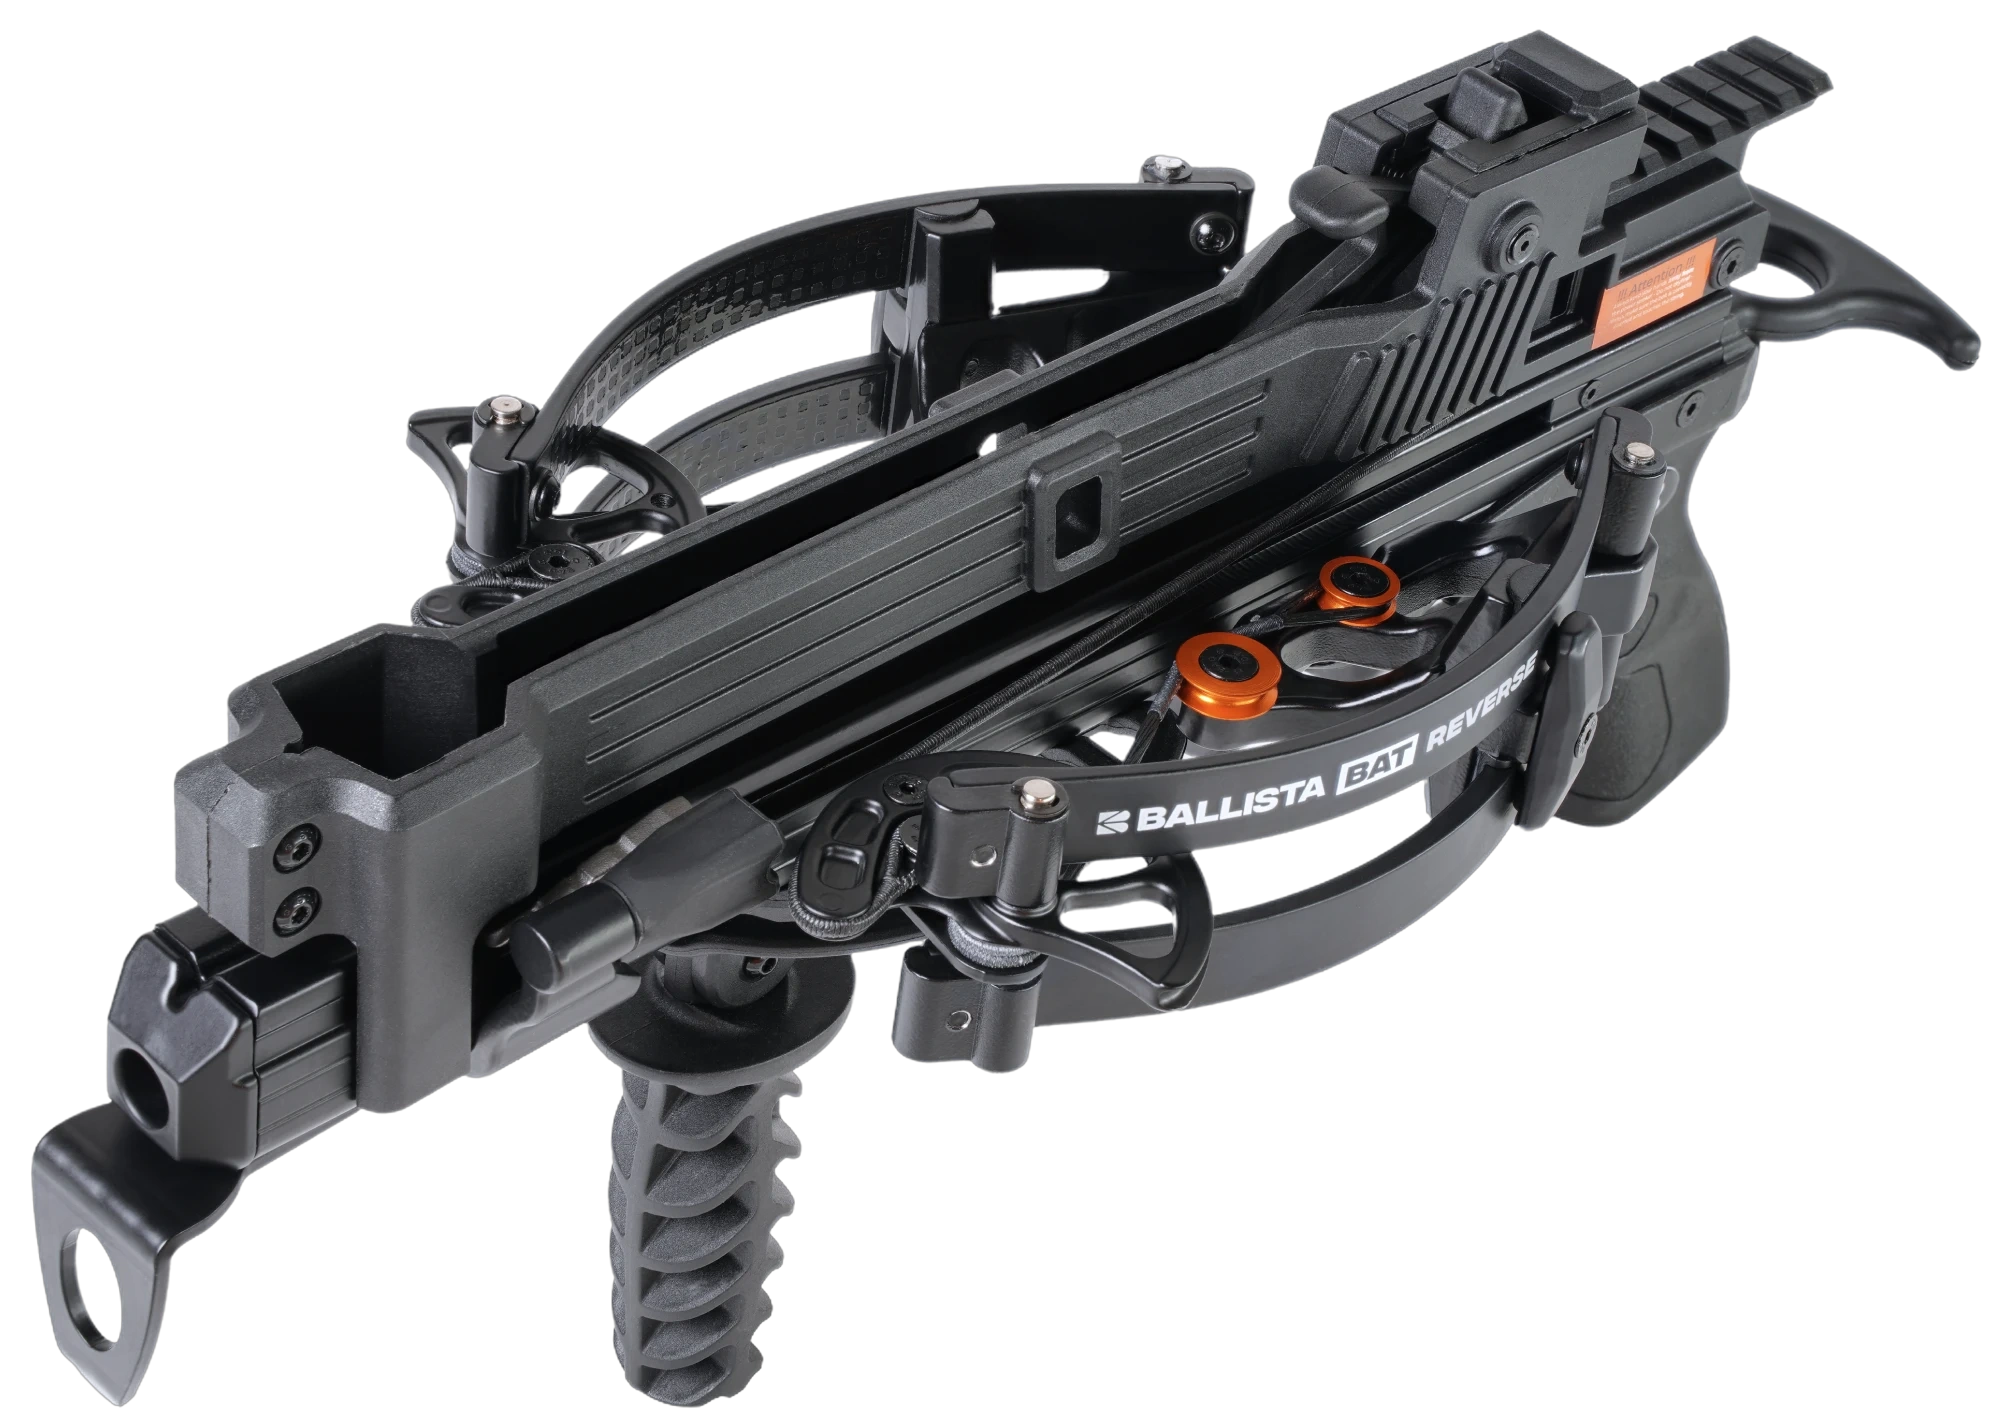 pistol crossbow with magazine